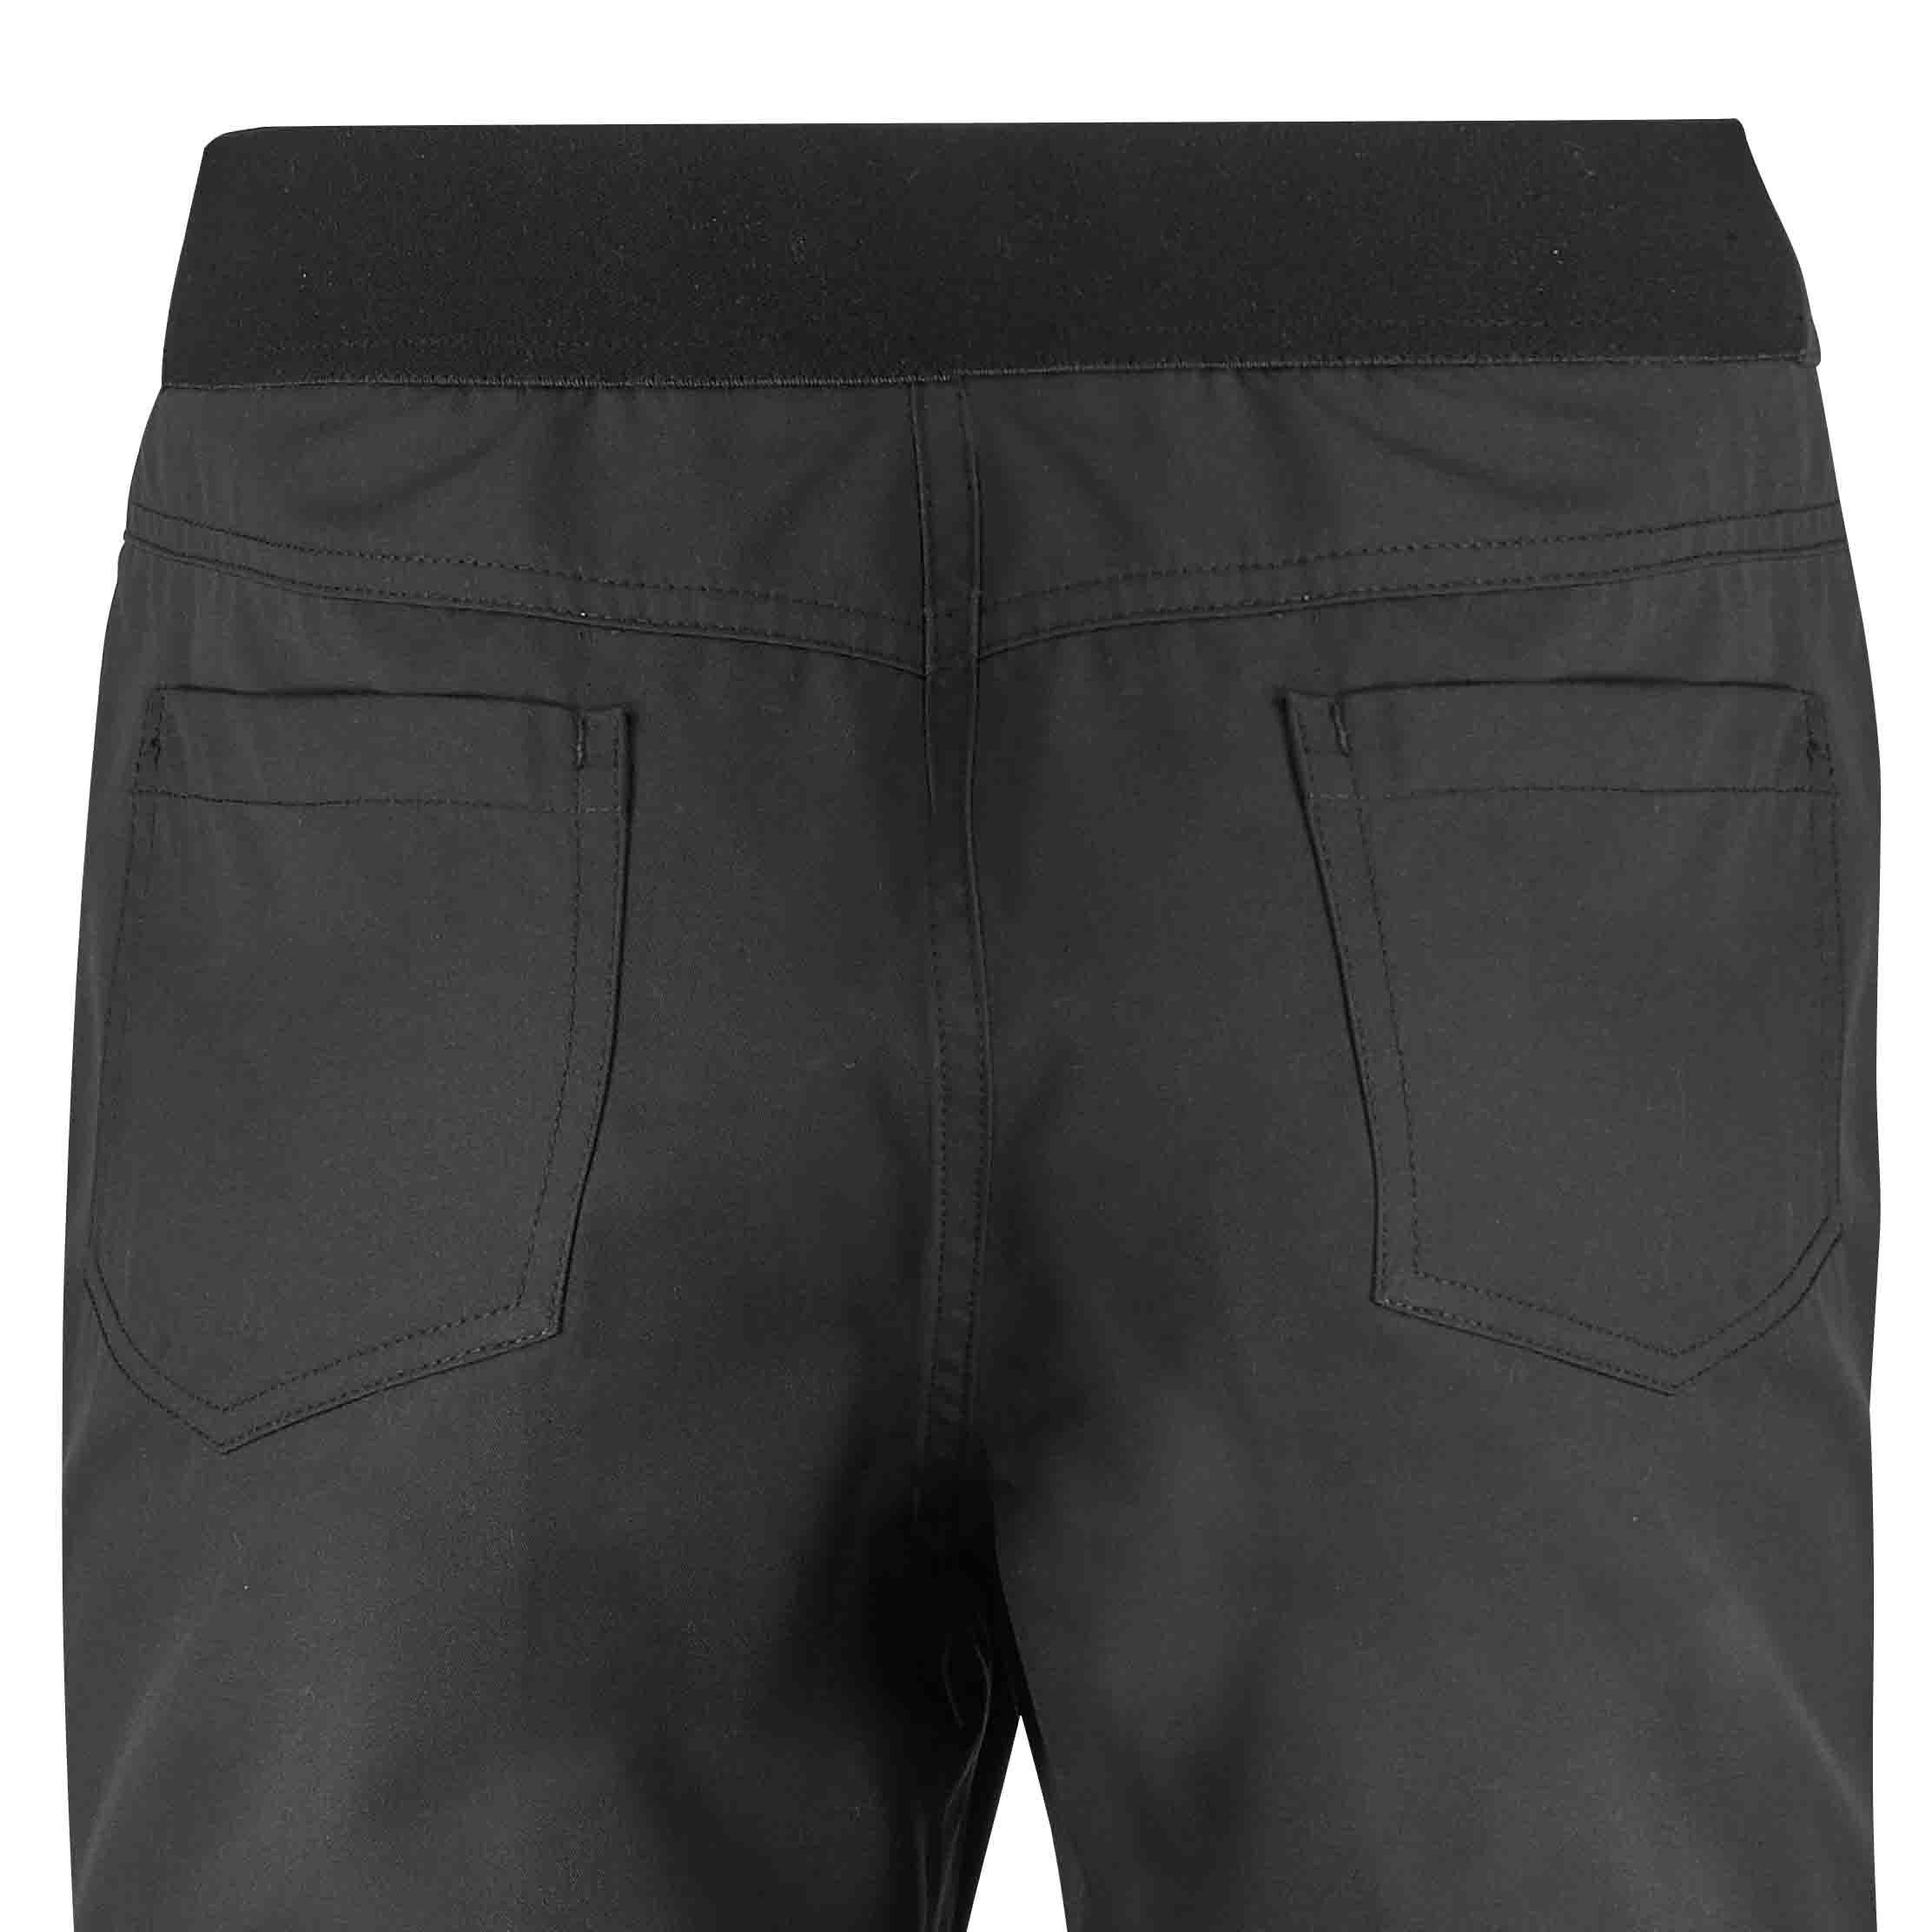 Zoom dos Pantalon FUSION homme noir.